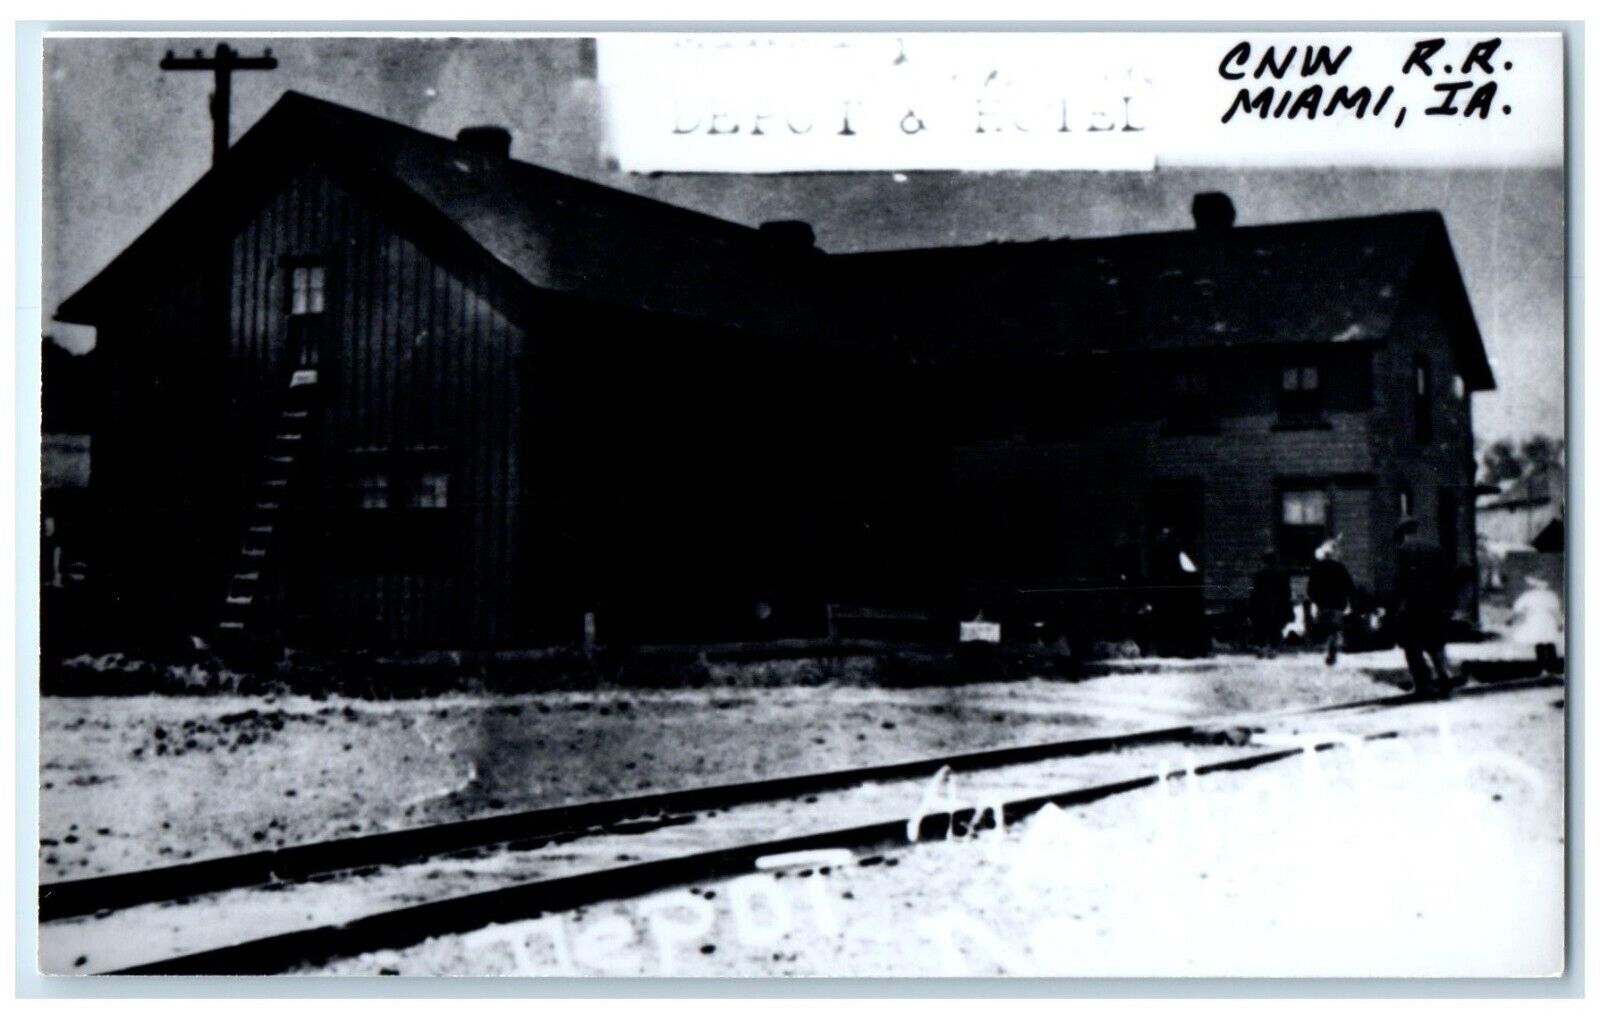 c1960 CBW RR Miami Iowa Vintage Antique Train Depot Station RPPC Photo Postcard